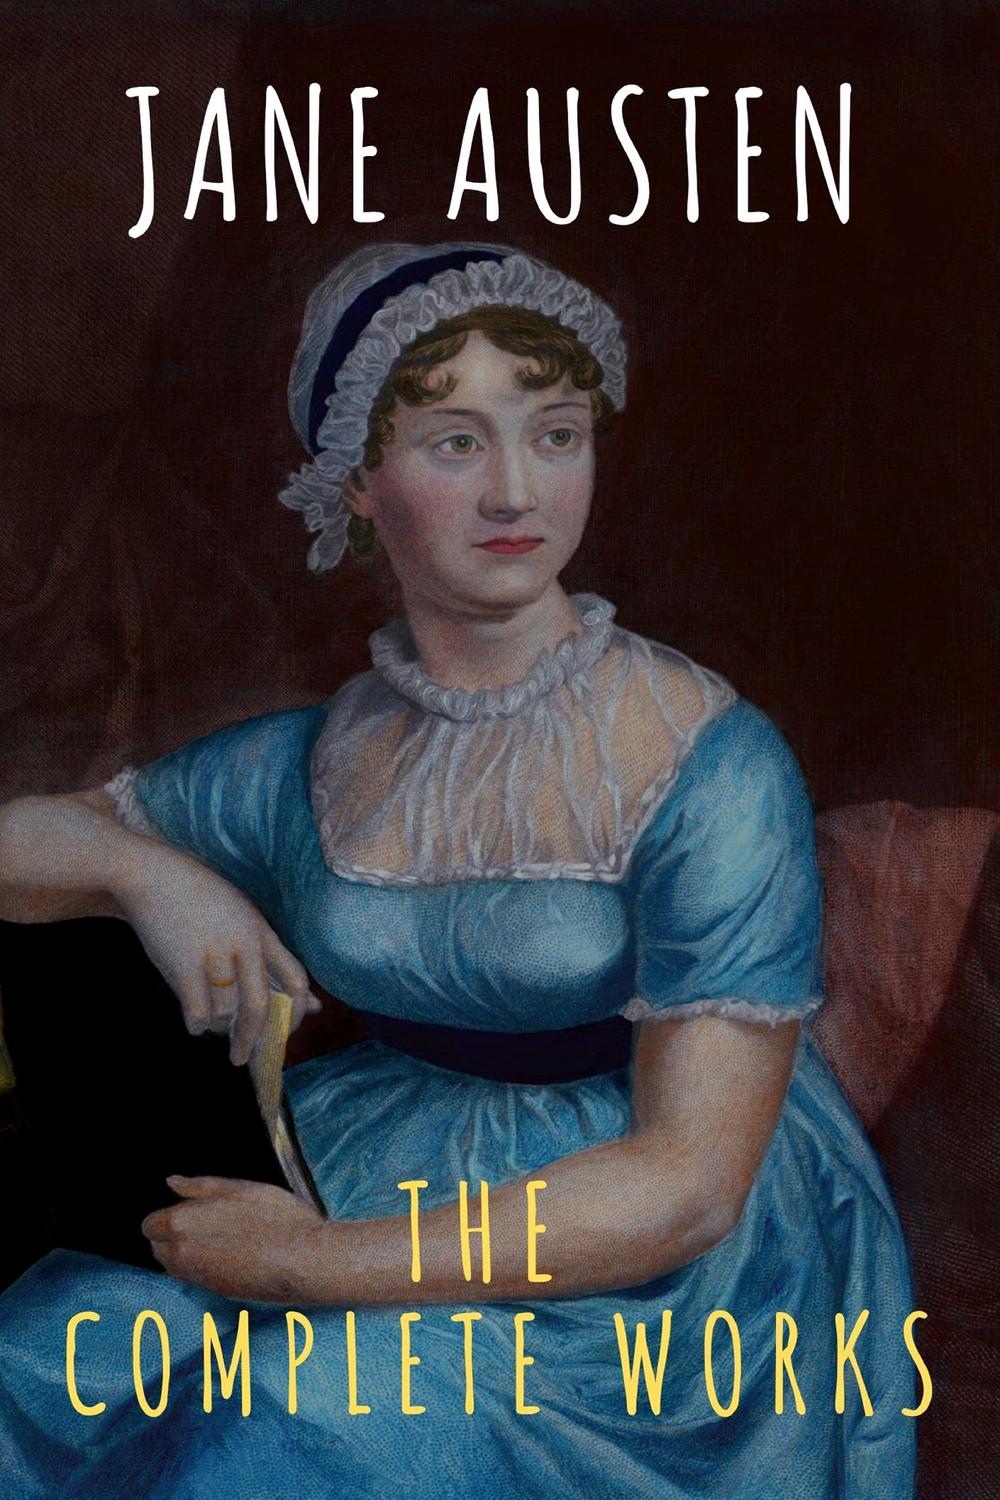 The Complete Works of Jane Austen - Jane Austen, The griffin classics,,